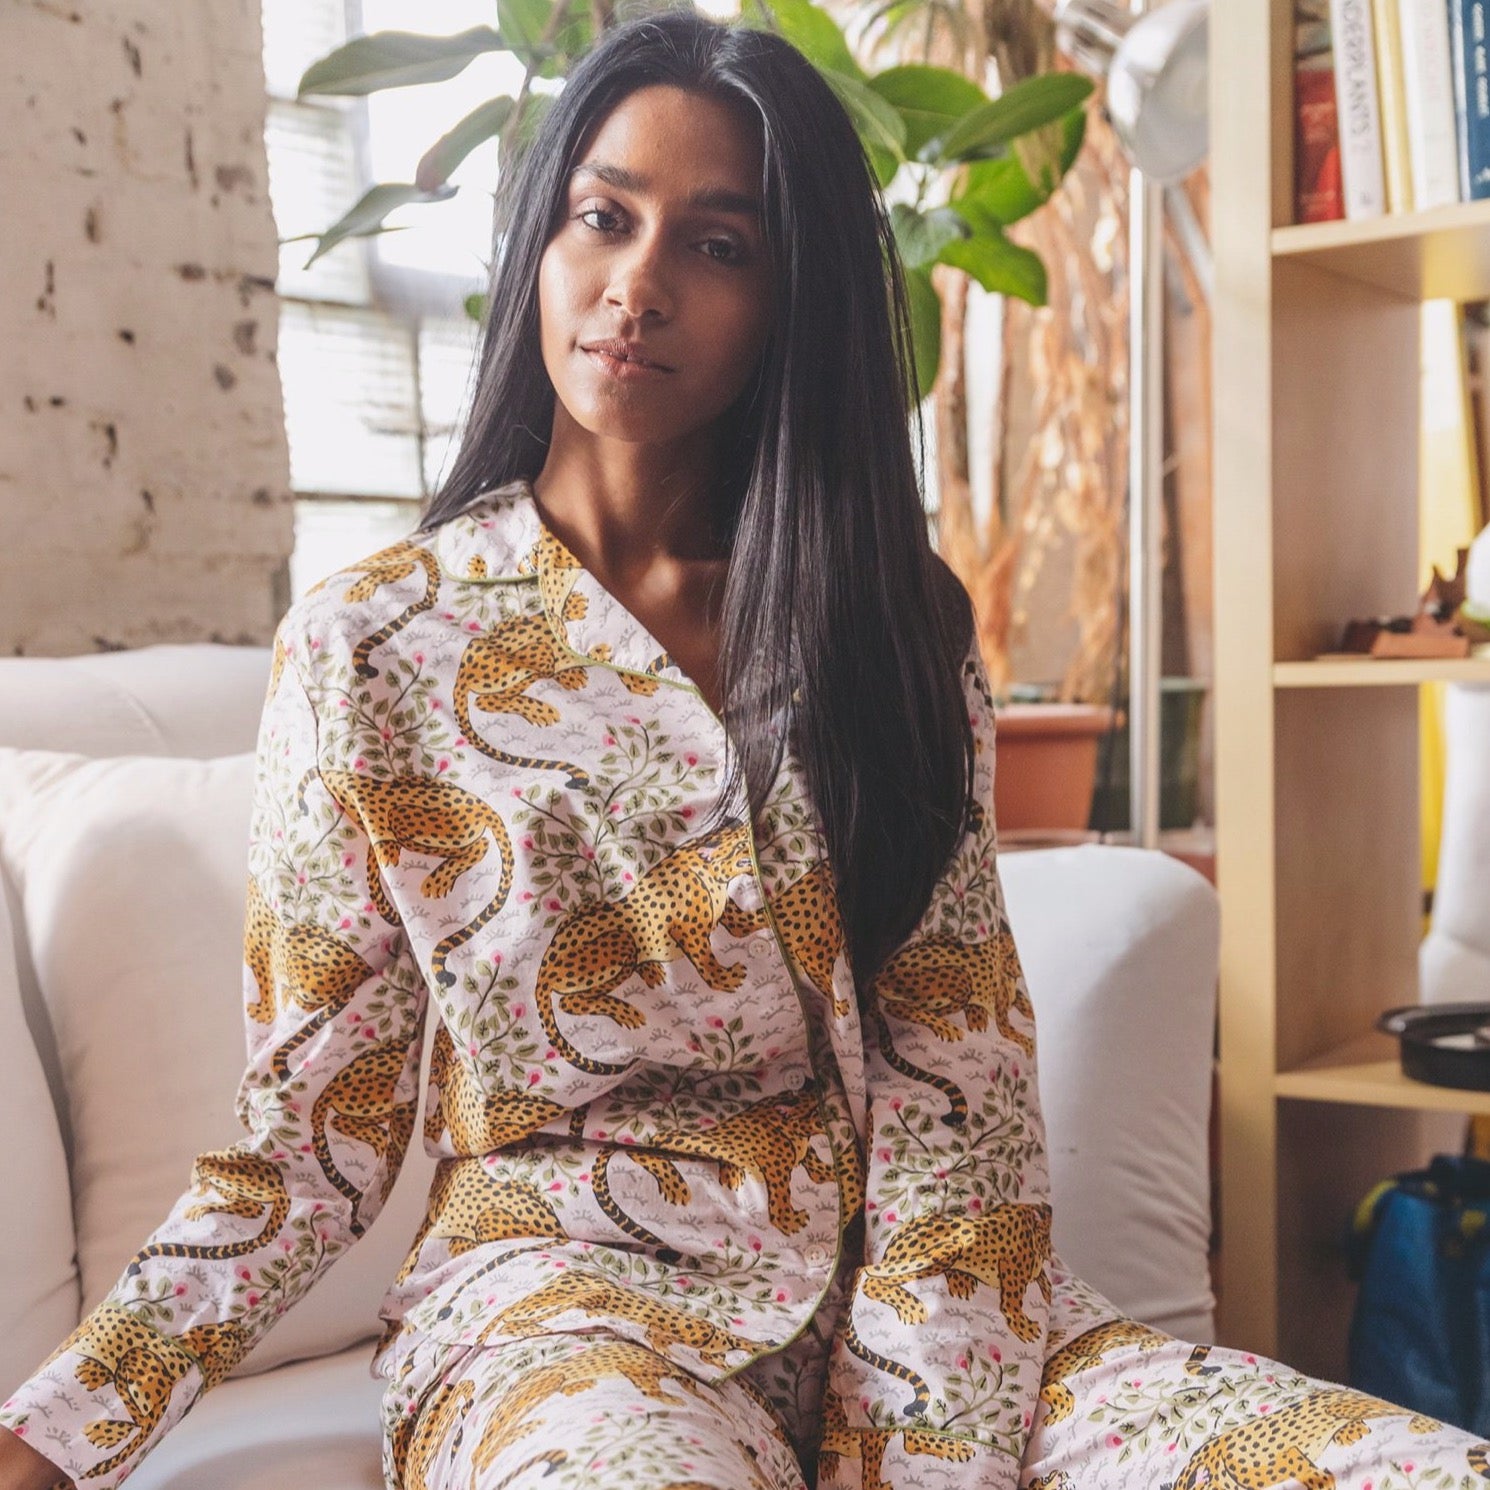 Printfresh Bagheera Leopard Print Long Sleeve Pajama Set (multiple colors)